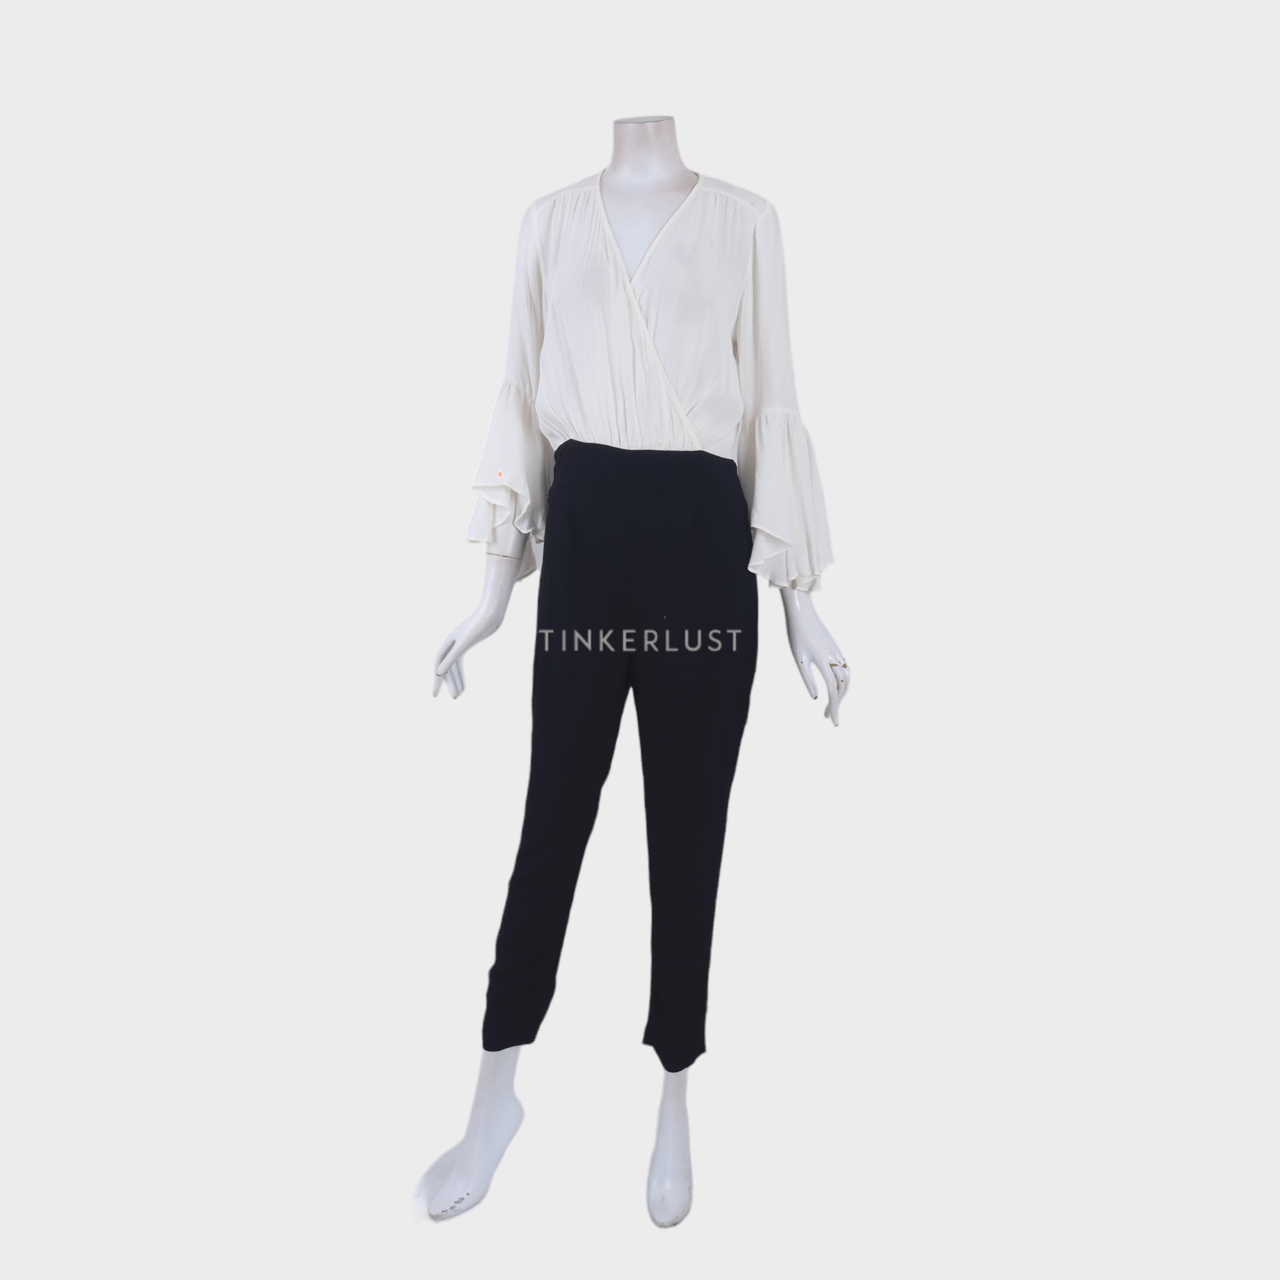 Zara Black & White Jumpsuit